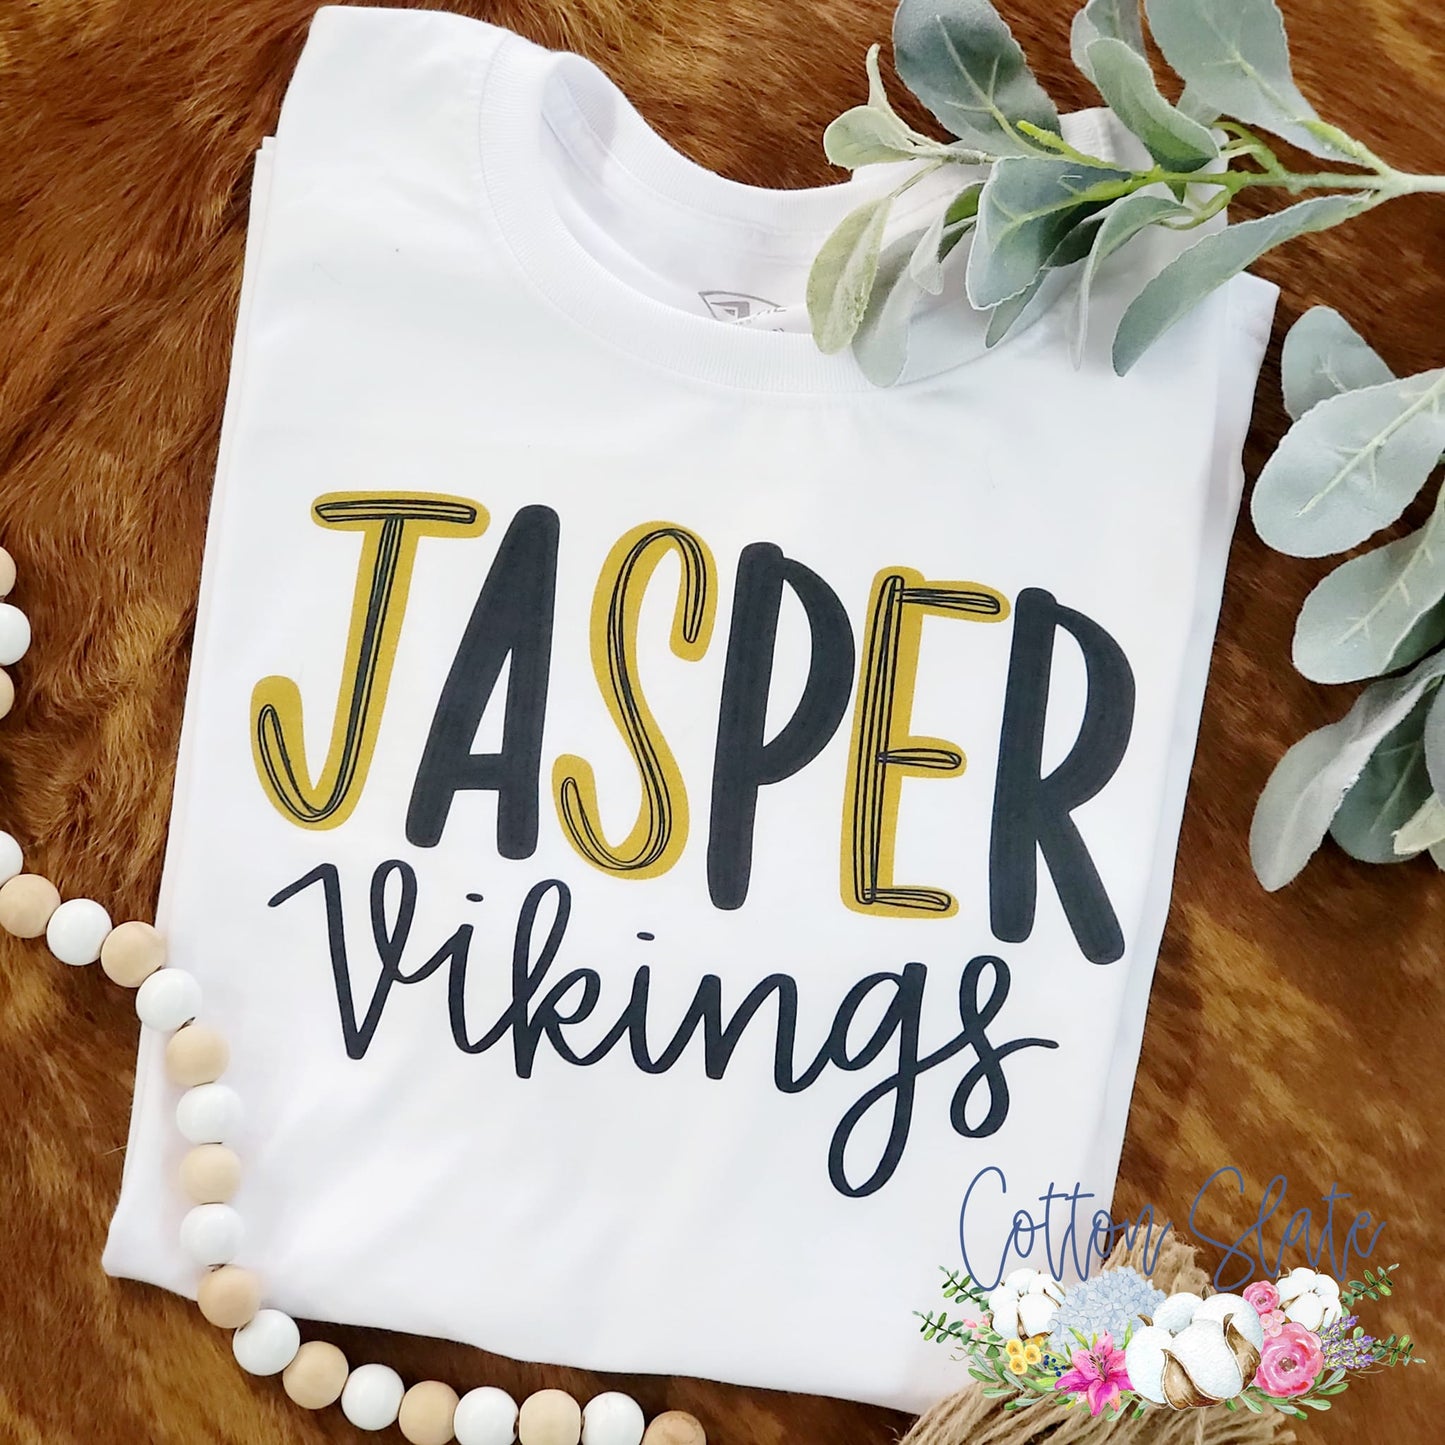 Jasper Vikings Tee